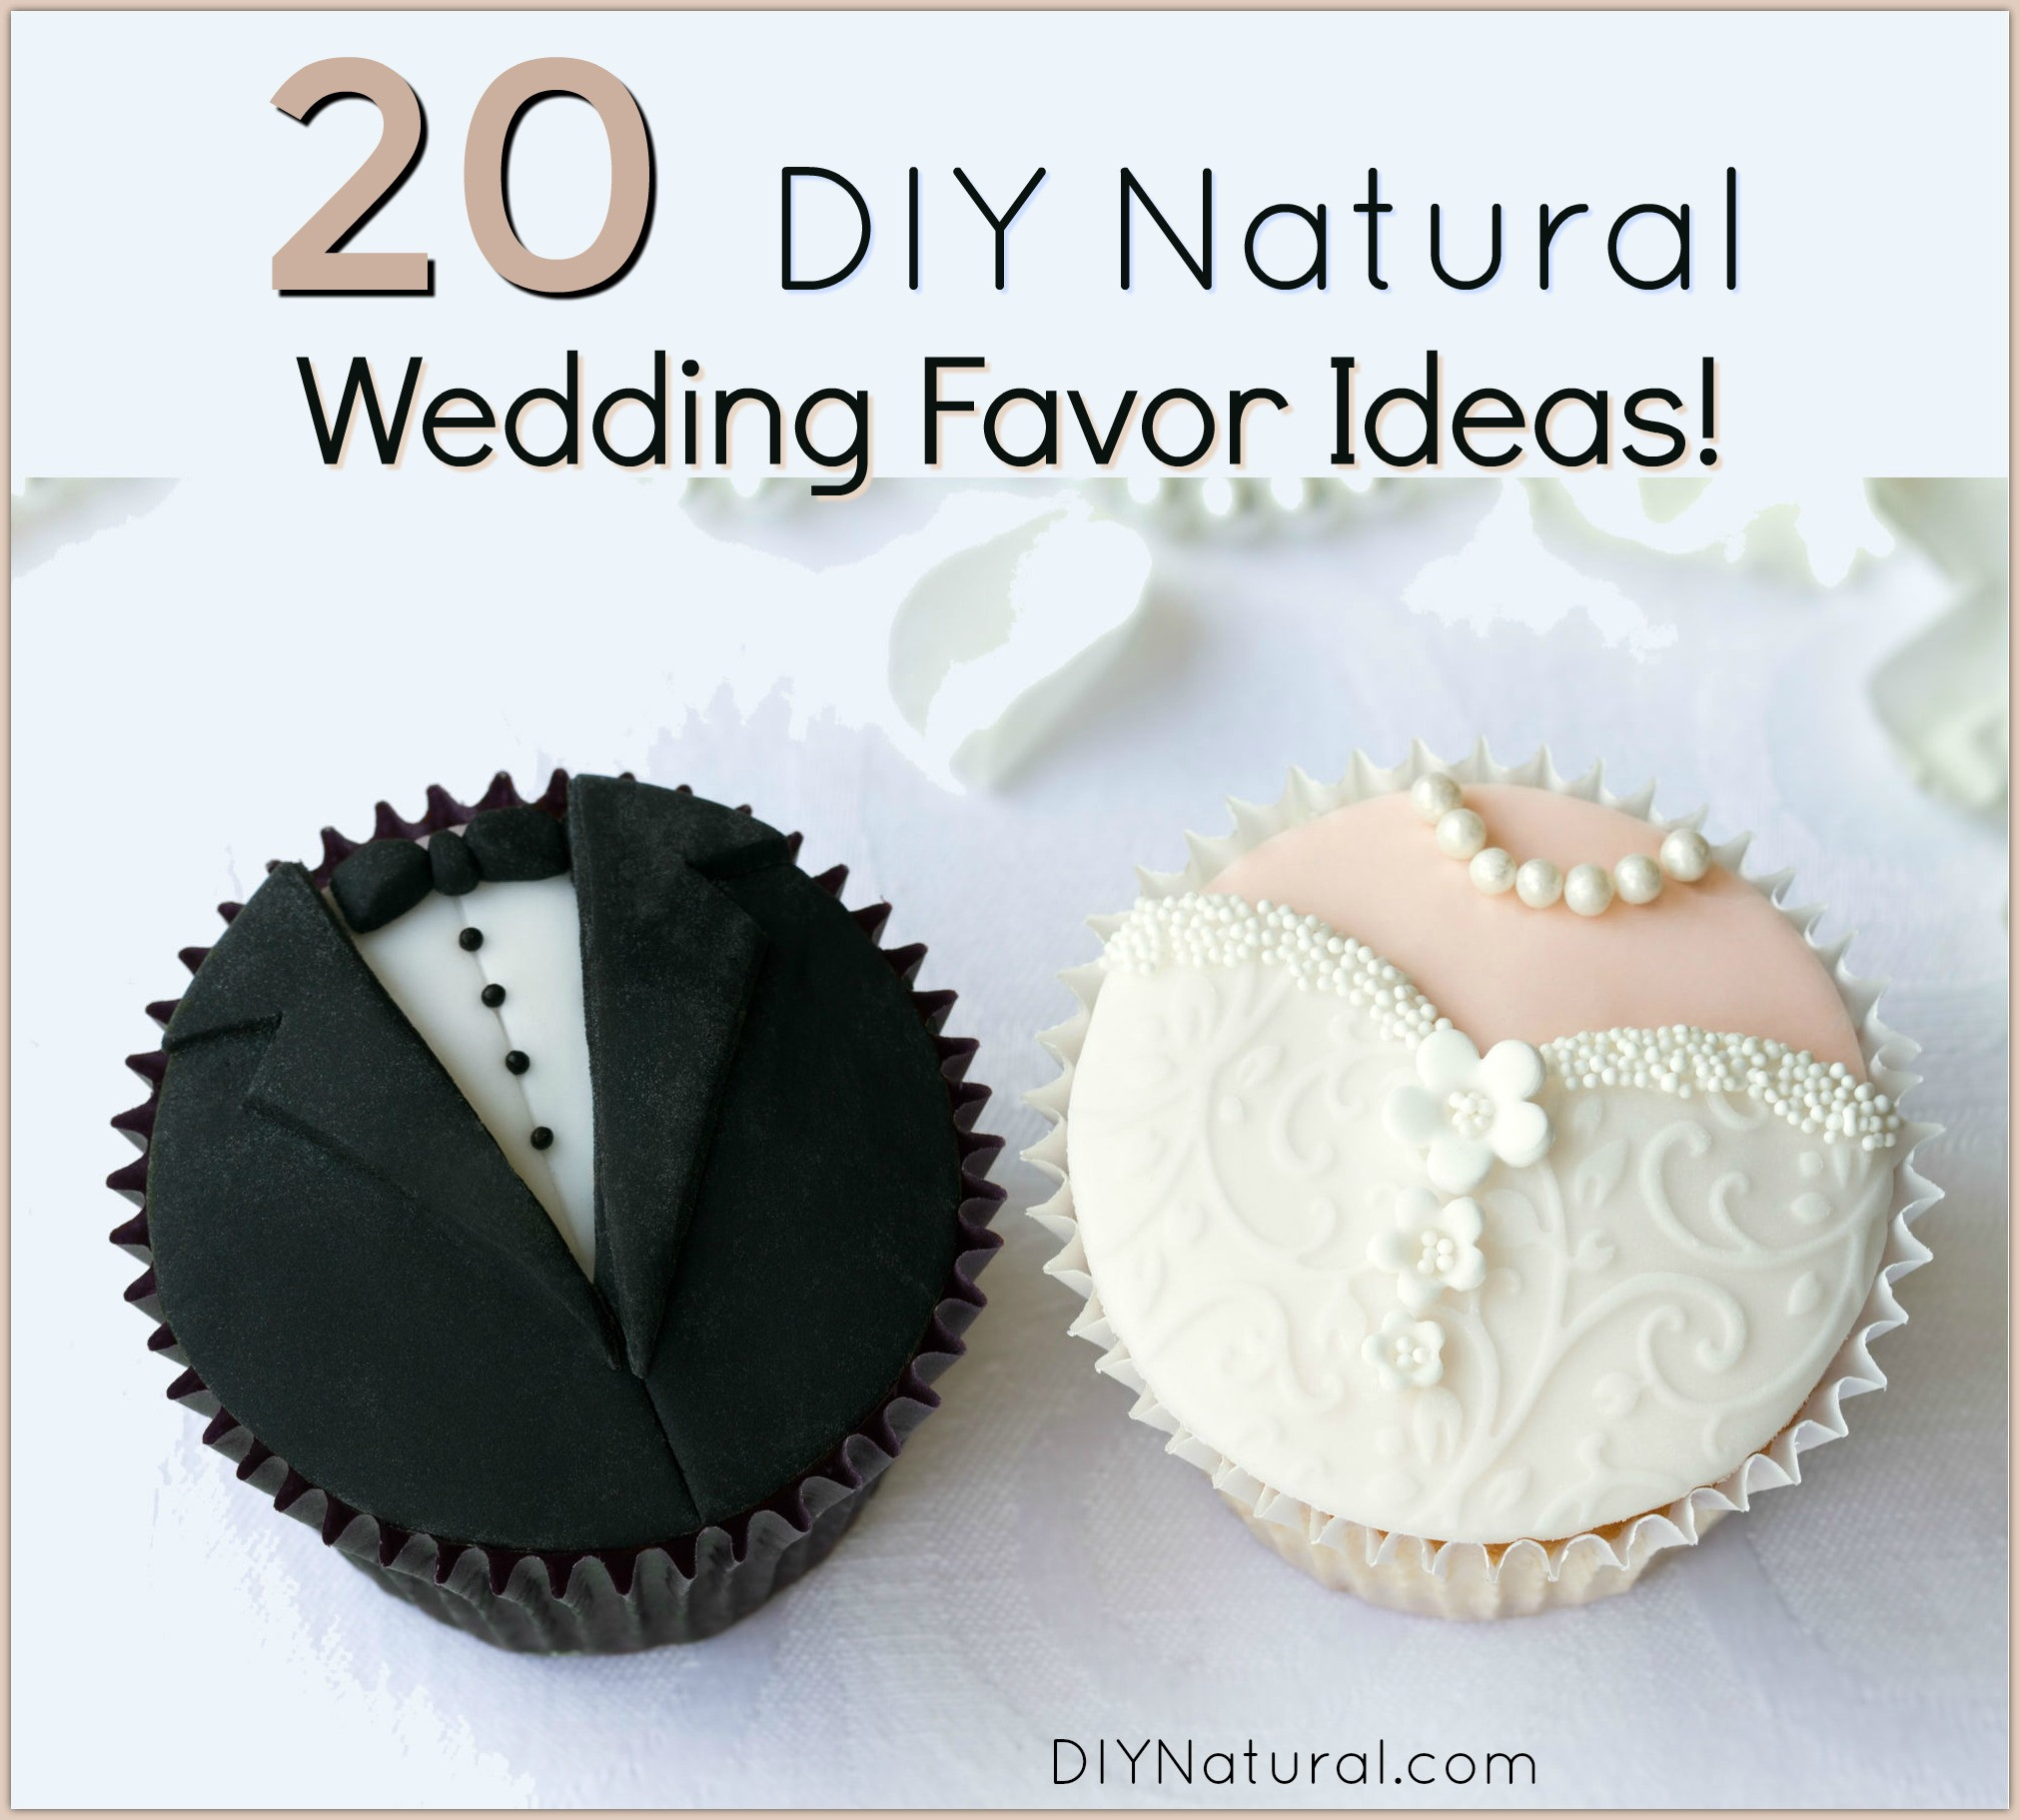 Best ideas about DIY Wedding Favor Ideas
. Save or Pin DIY Wedding Favors 20 Ideas for Amazing Natural Wedding Now.